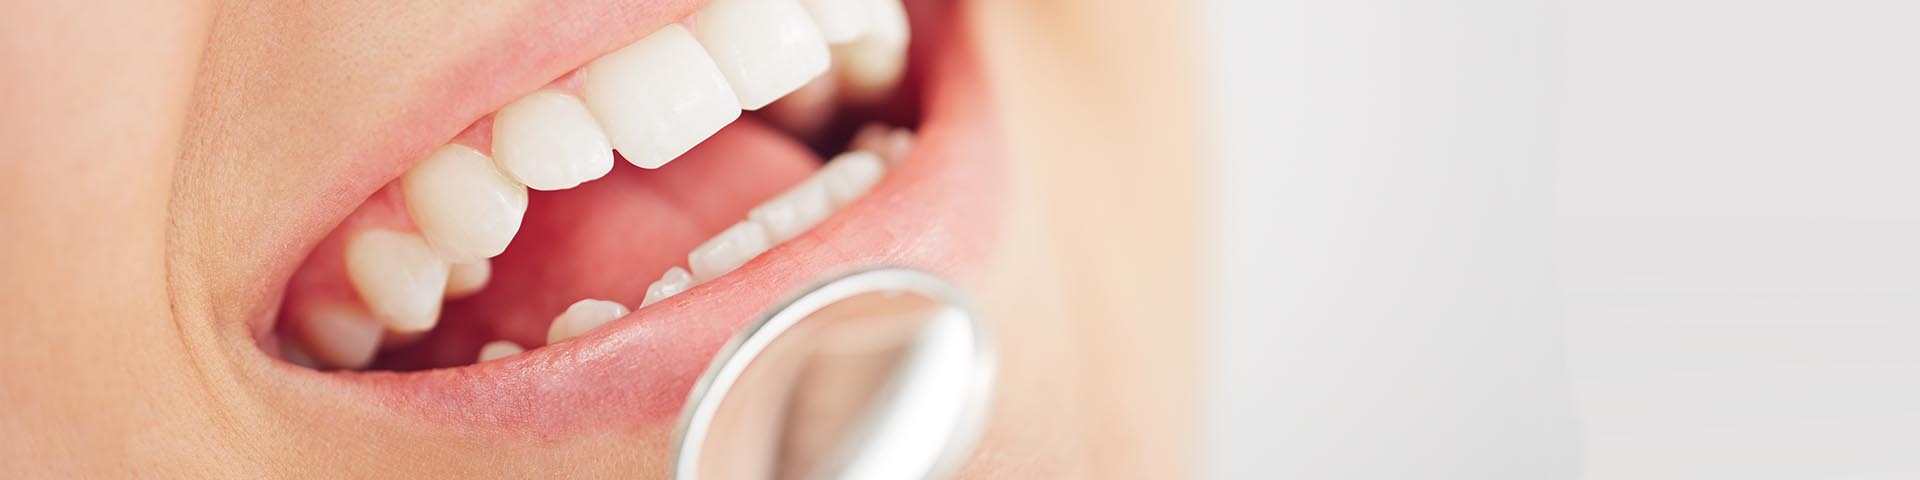 Gesunde Zahne Durch Zahnaufbau Maxcare